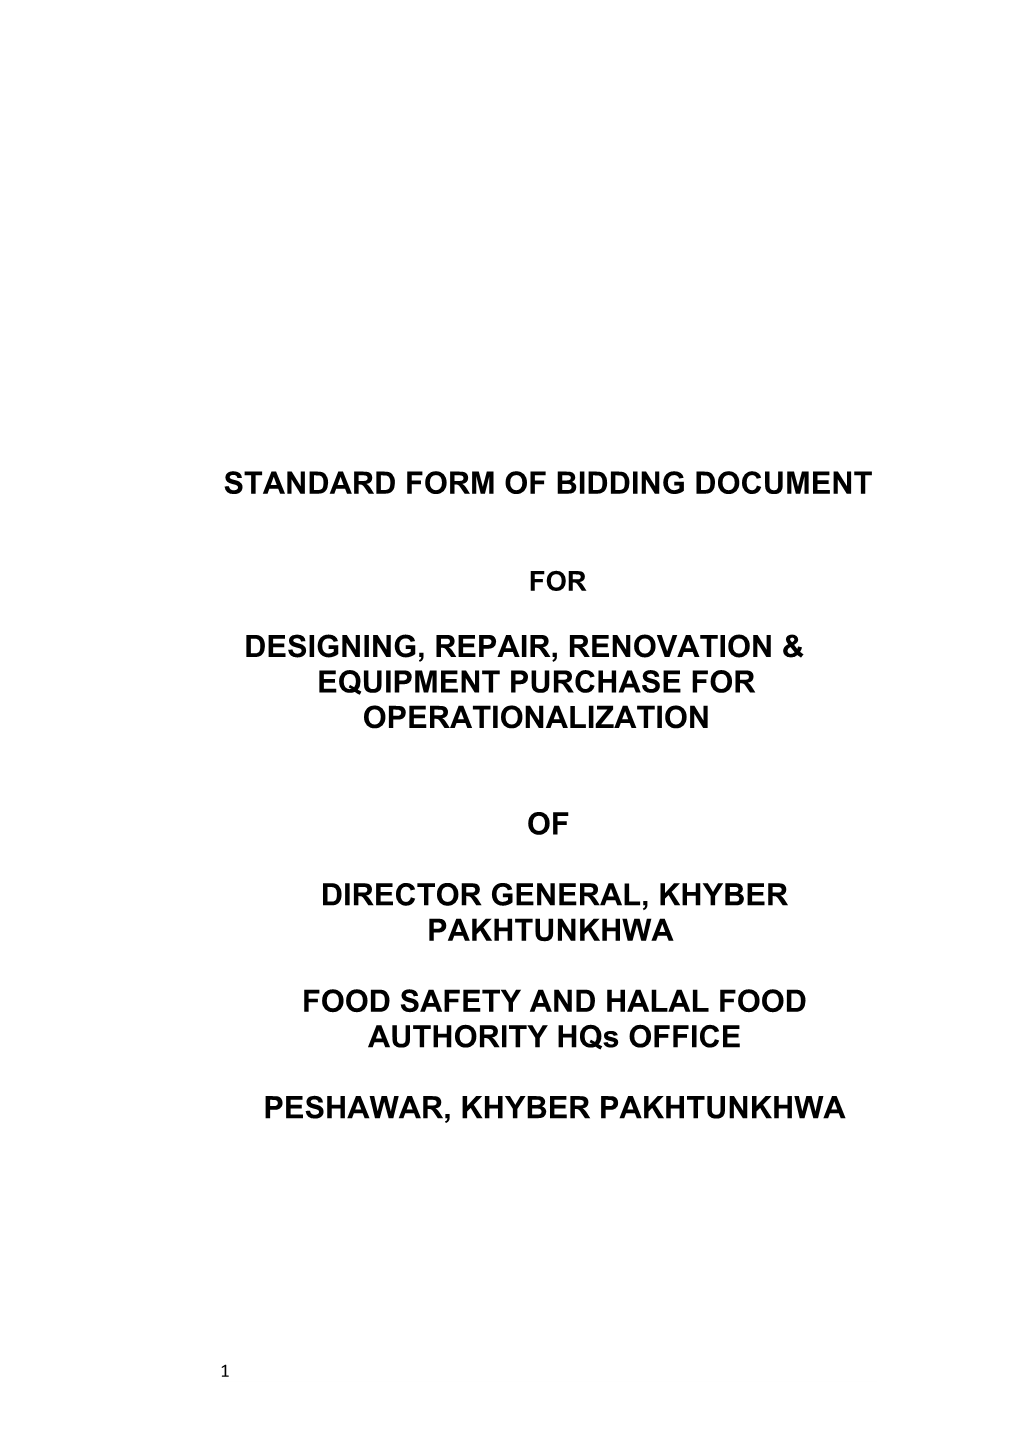 Standard Form of Bidding Document